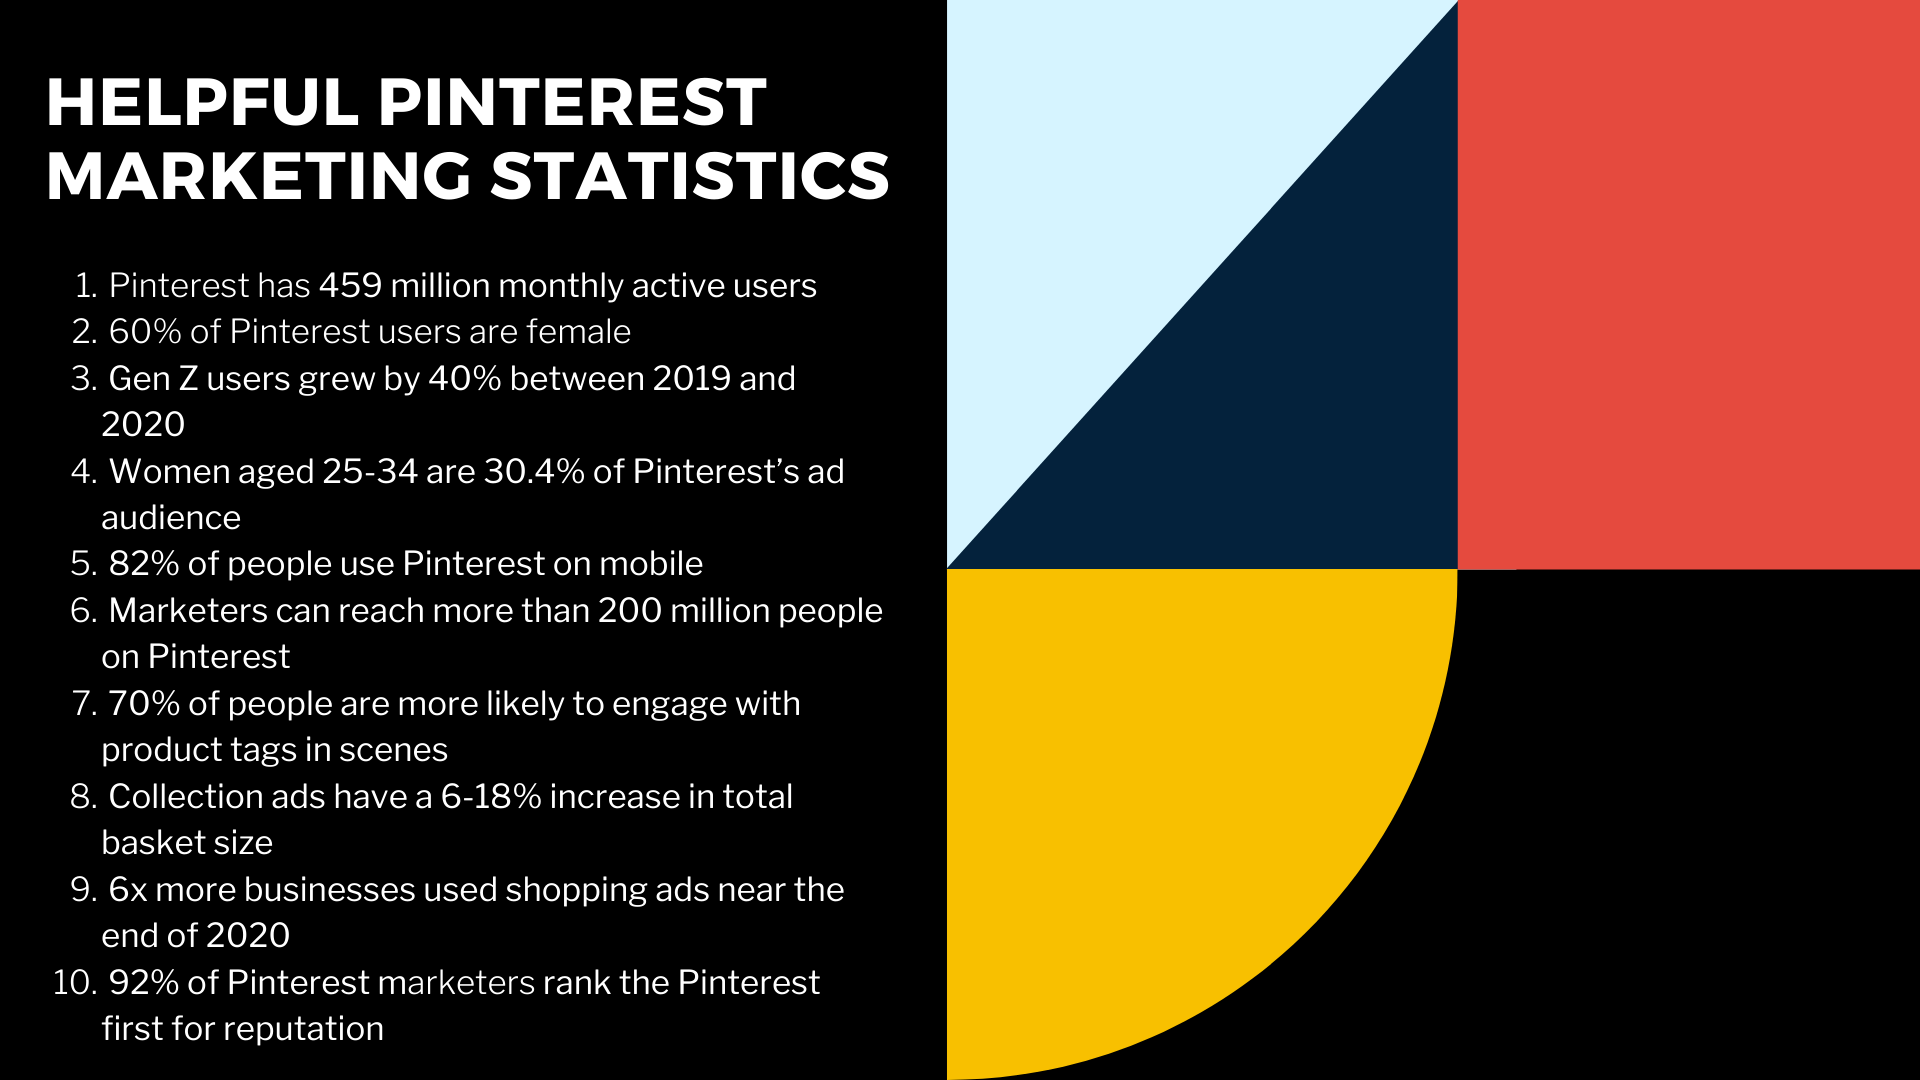 Pinterest Marketing Tips: Pinterest Marketing Statistics